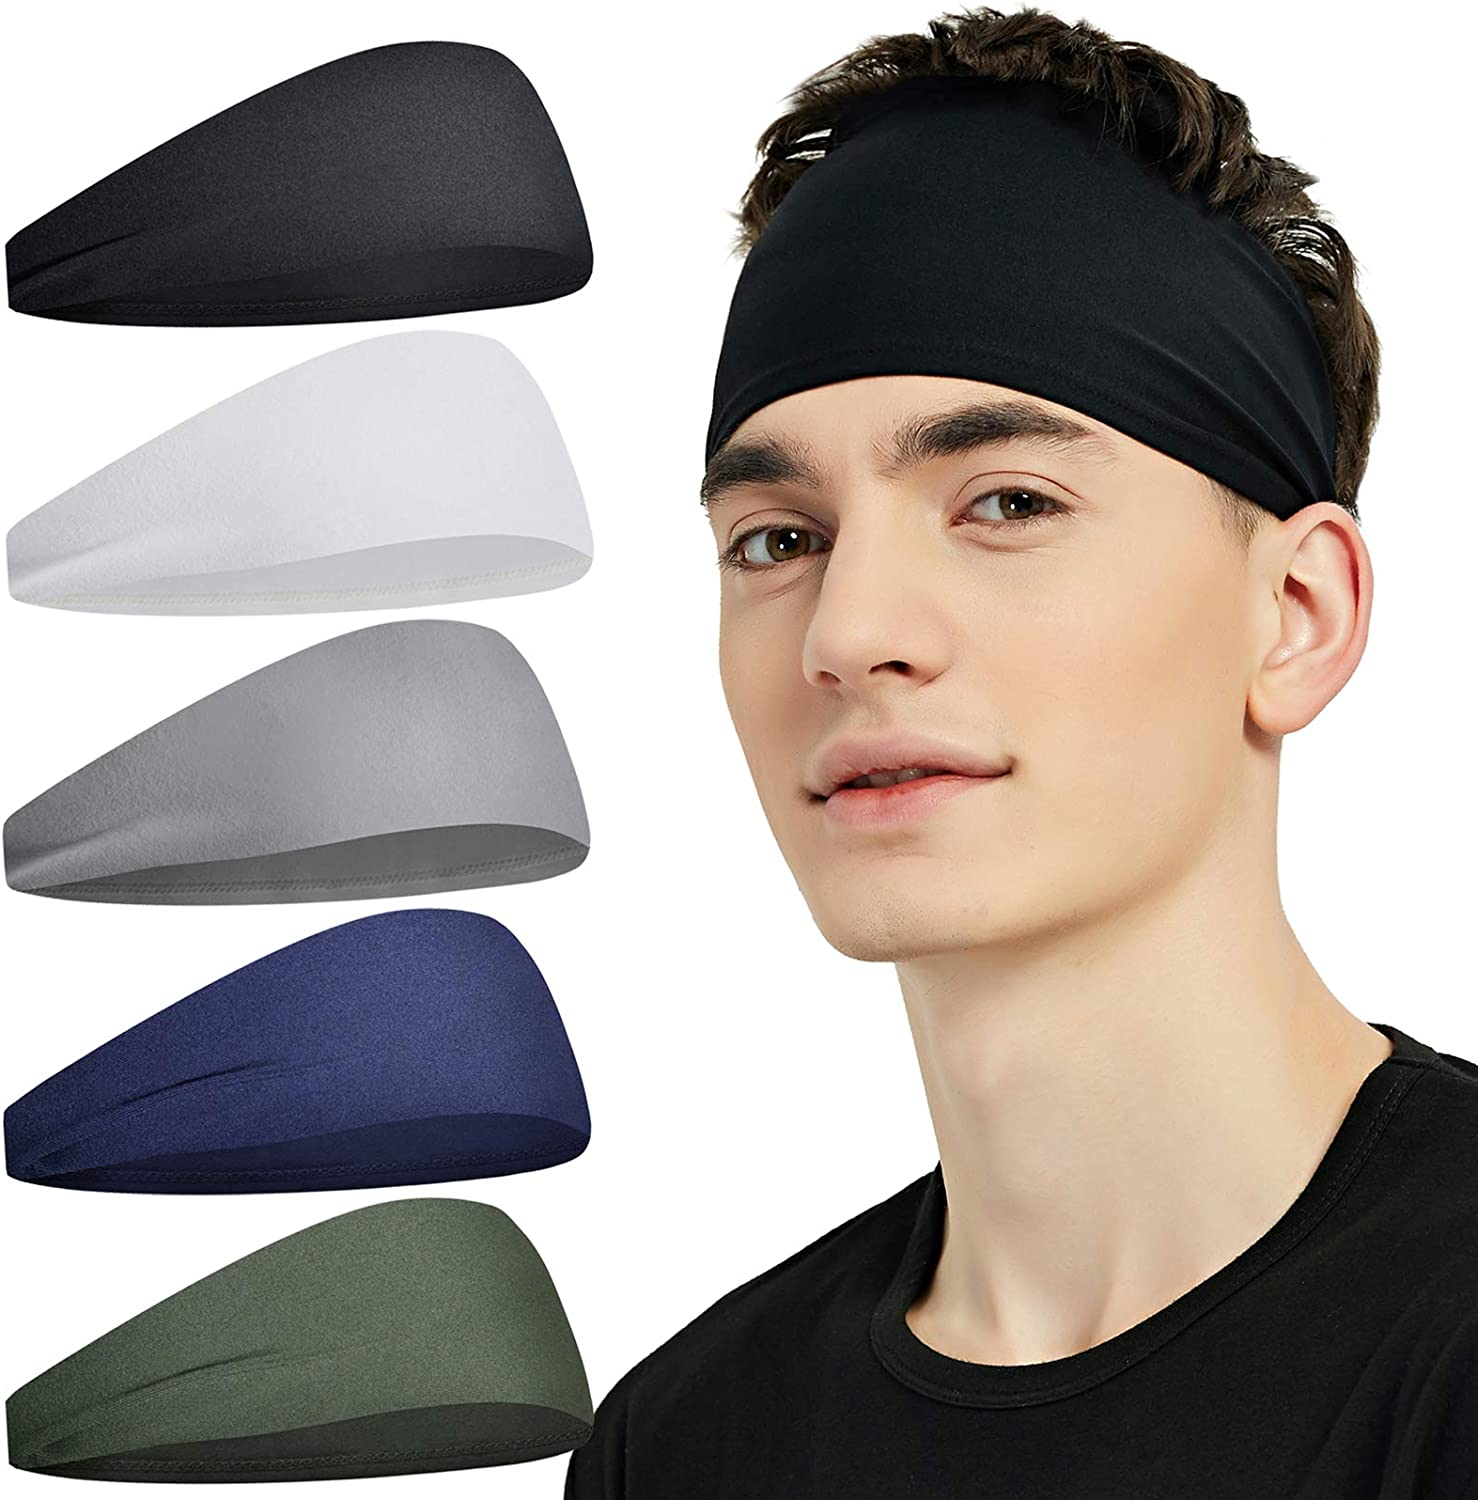 Sports Headbands for Men Sweatband Headband Moisture Wicking Workout  Hairband